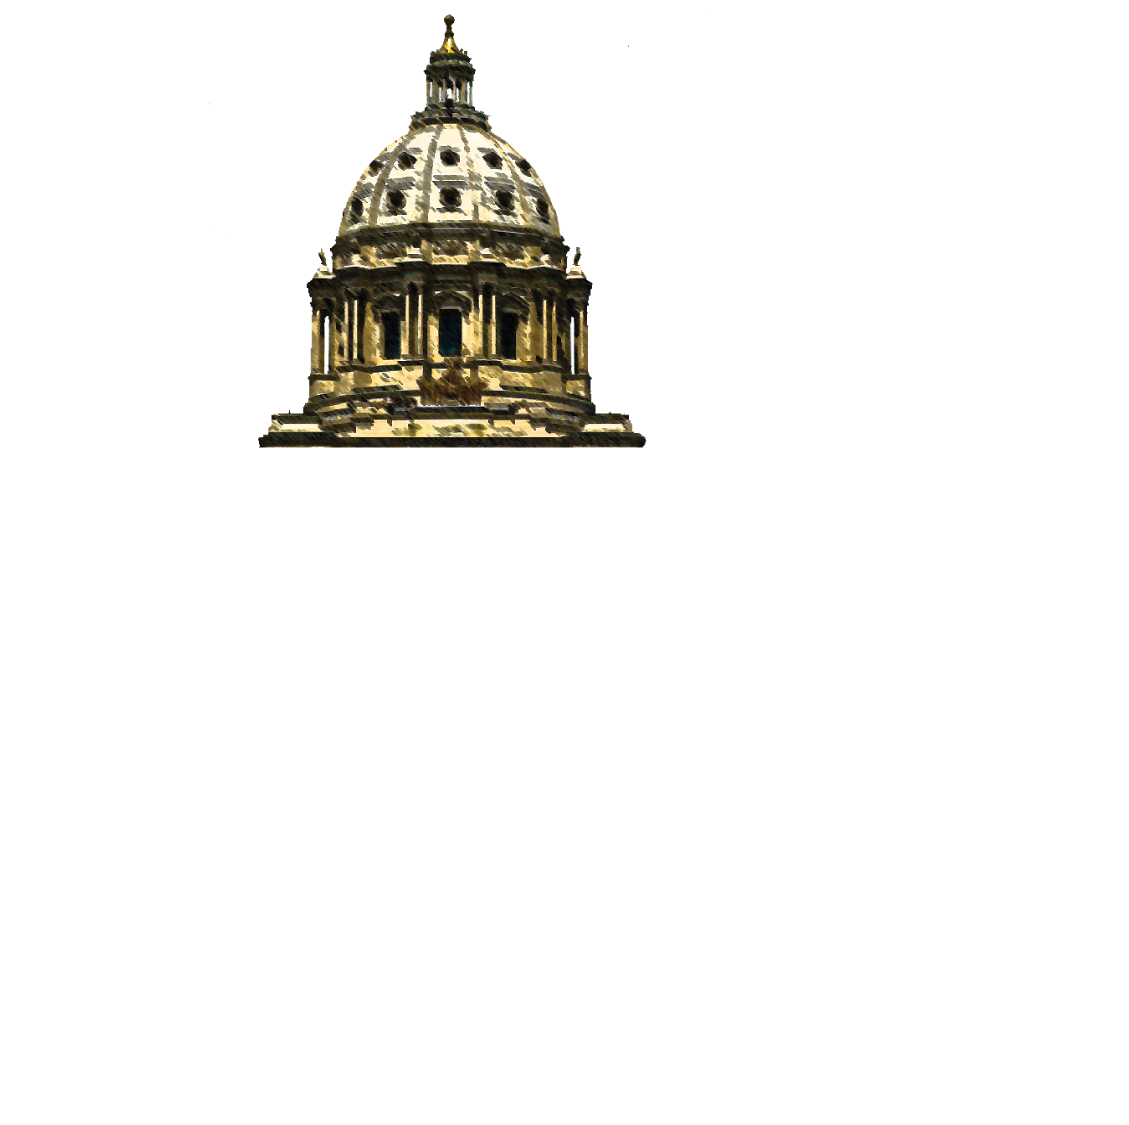 Your Legislators